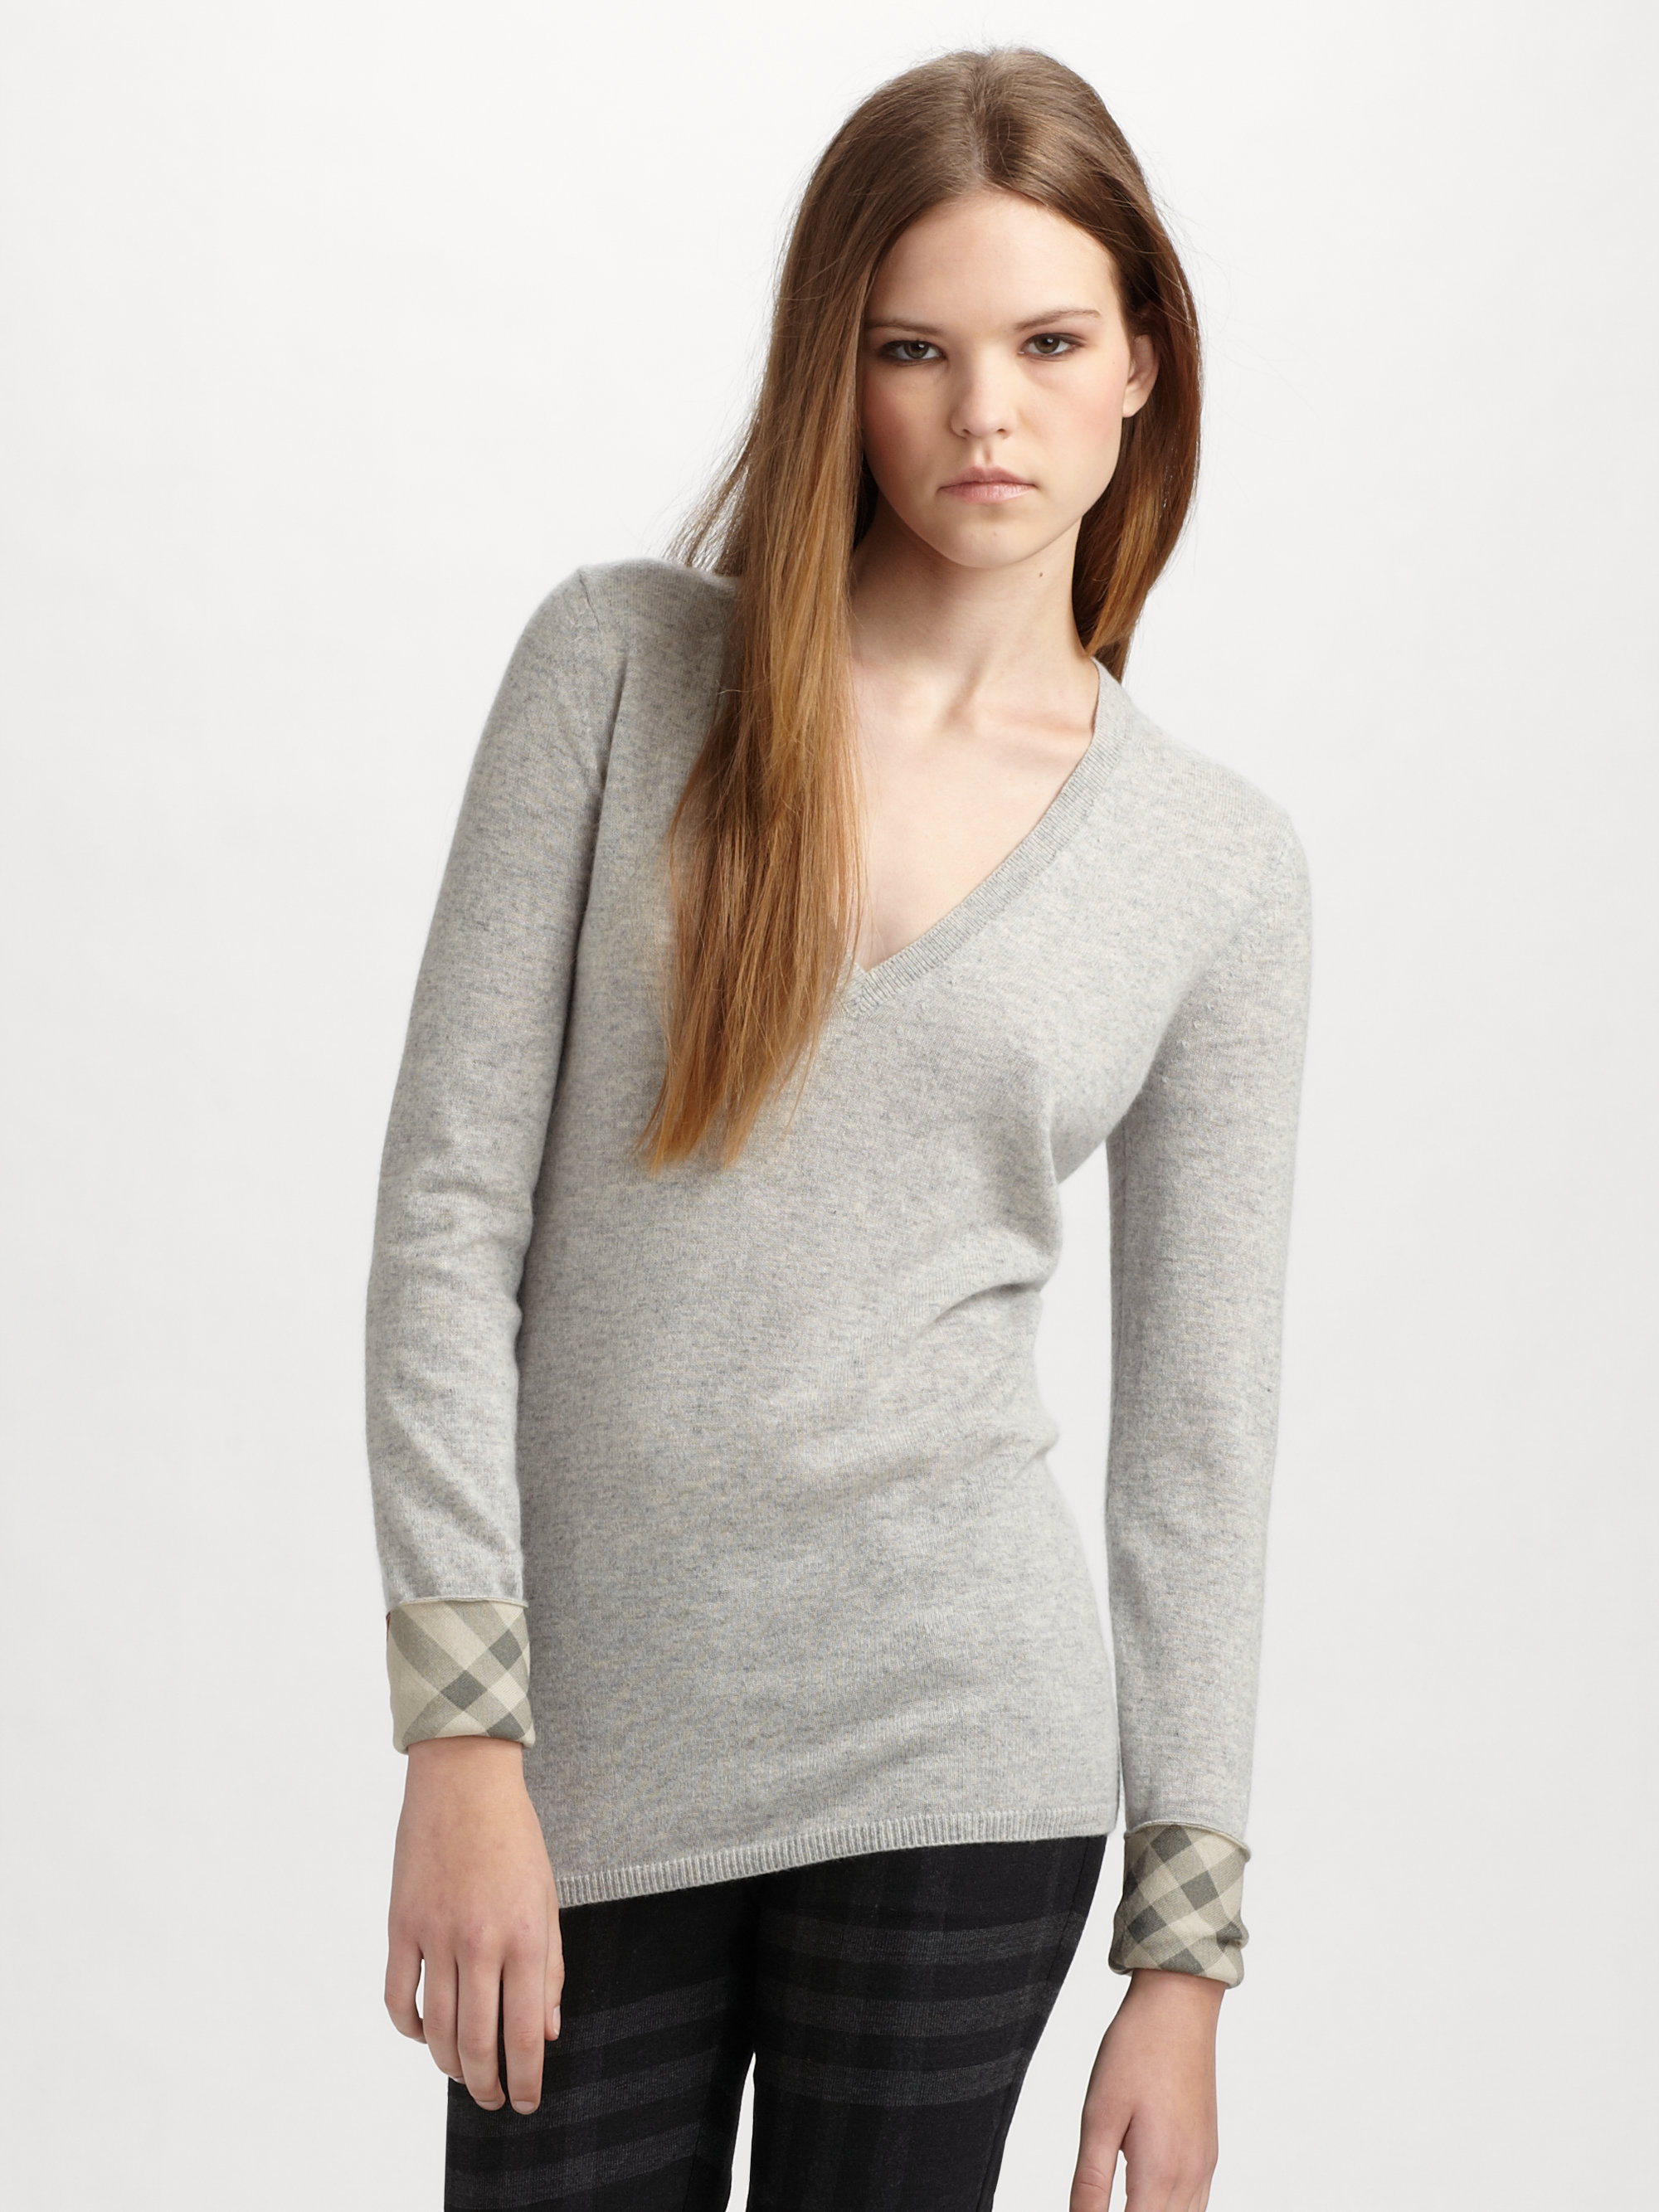 burberry sweater womens 2013